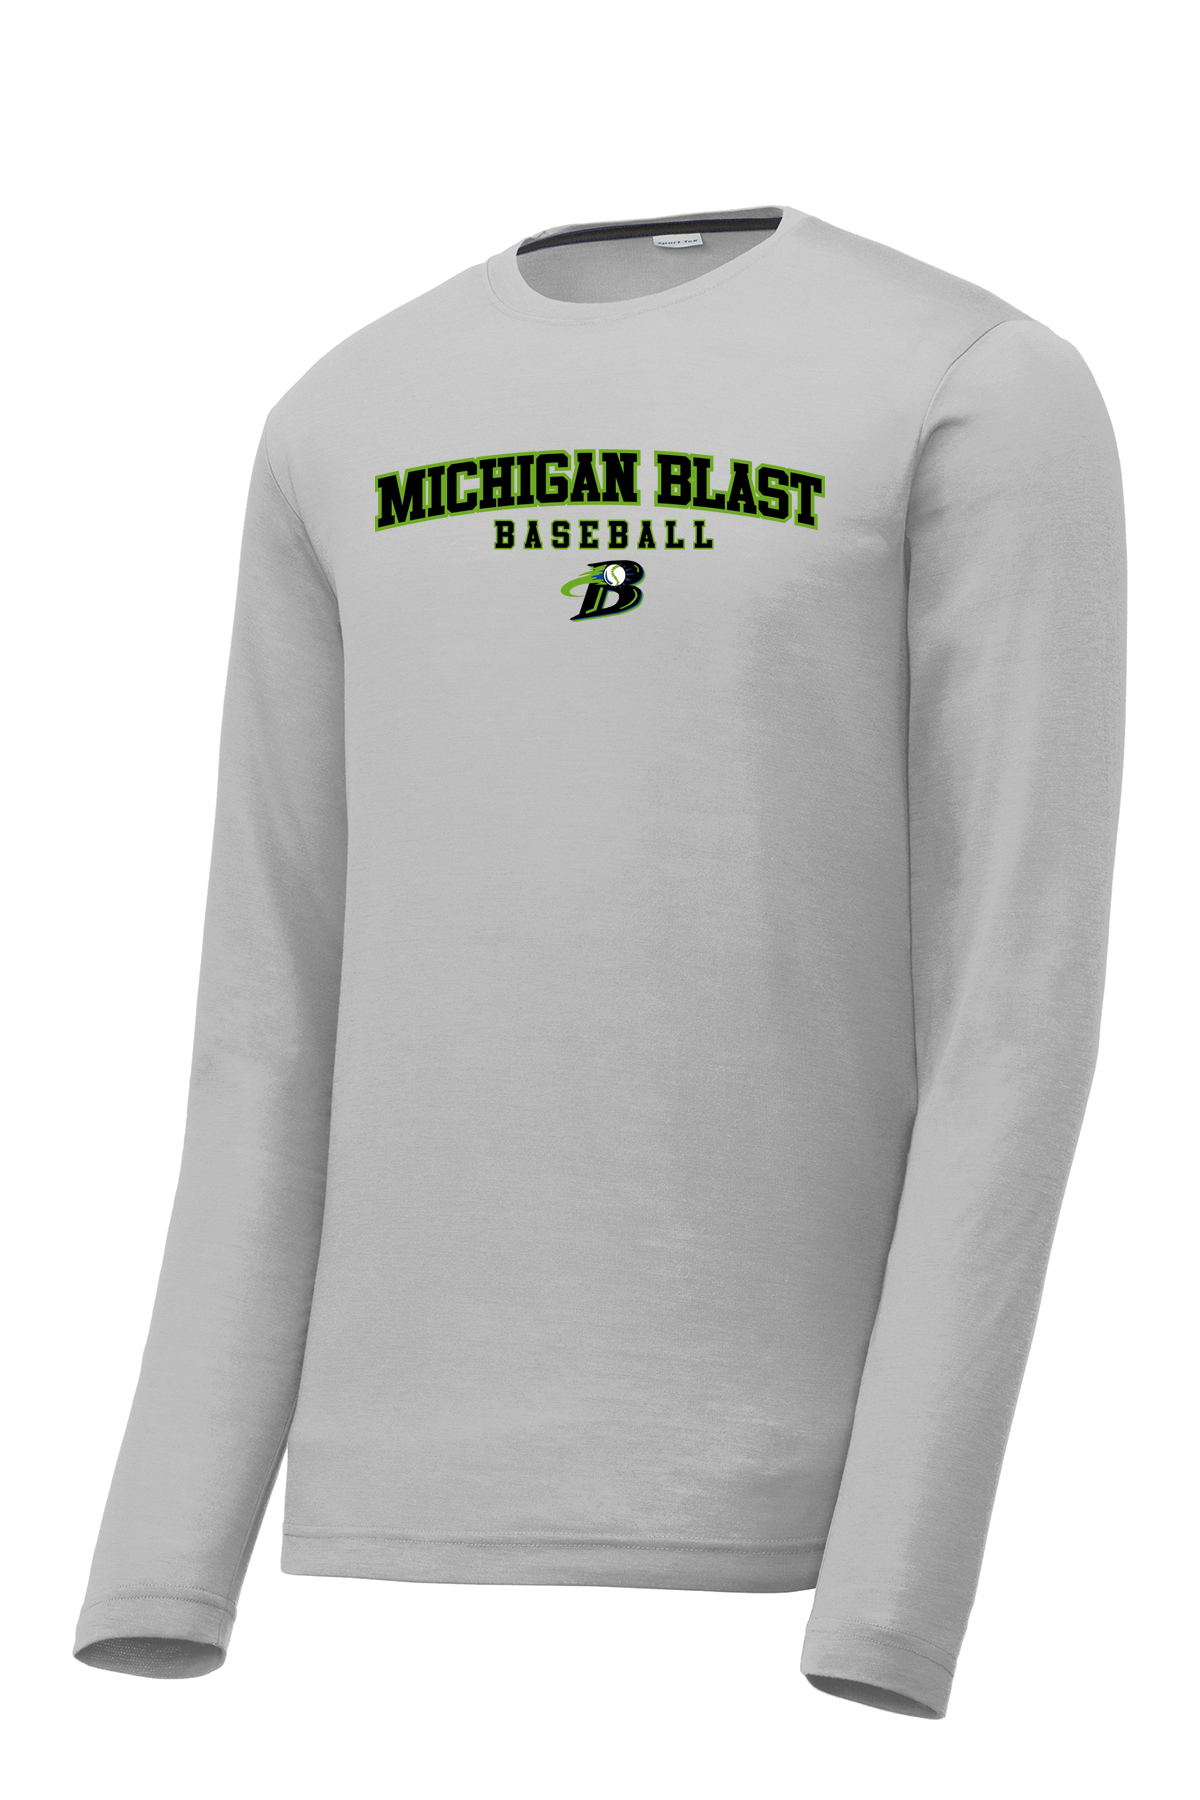 Michigan Blast Elite Baseball Long Sleeve CottonTouch Performance Shirt